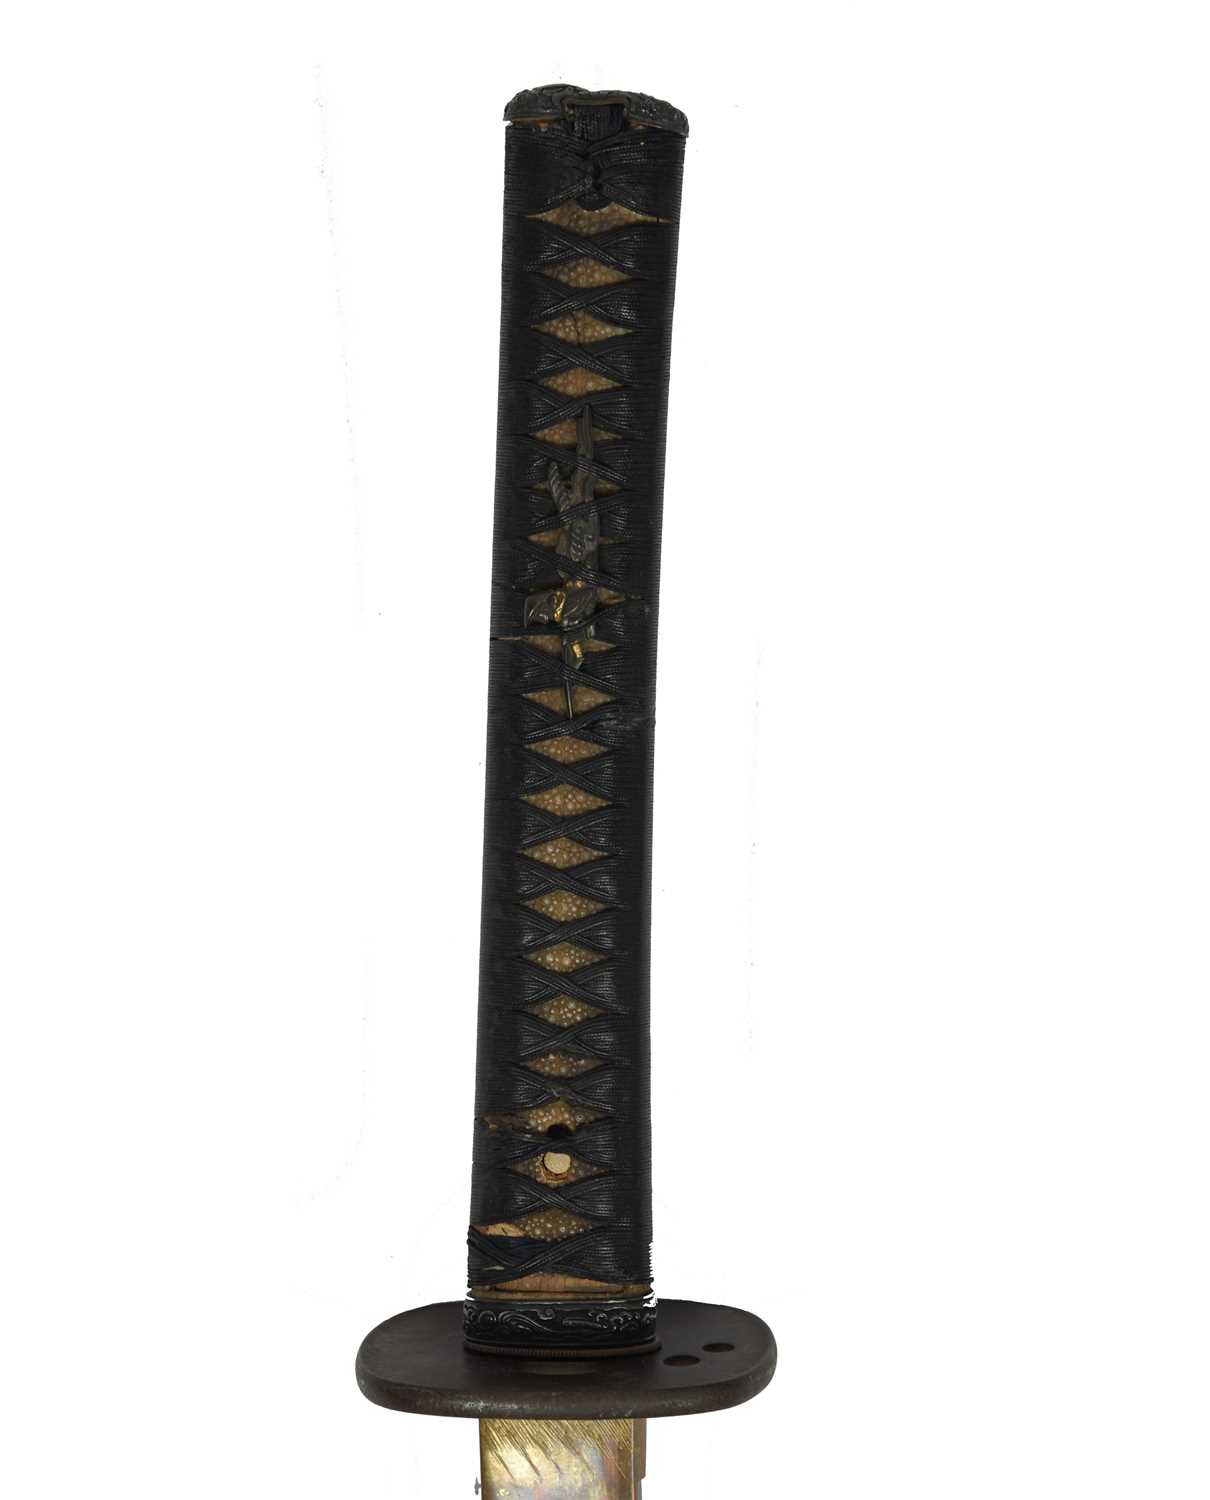 A Japanese sword (katana), blade 28 in., hon-zukiri, hamon based on suguha, signed (Omi no kami - Image 3 of 3